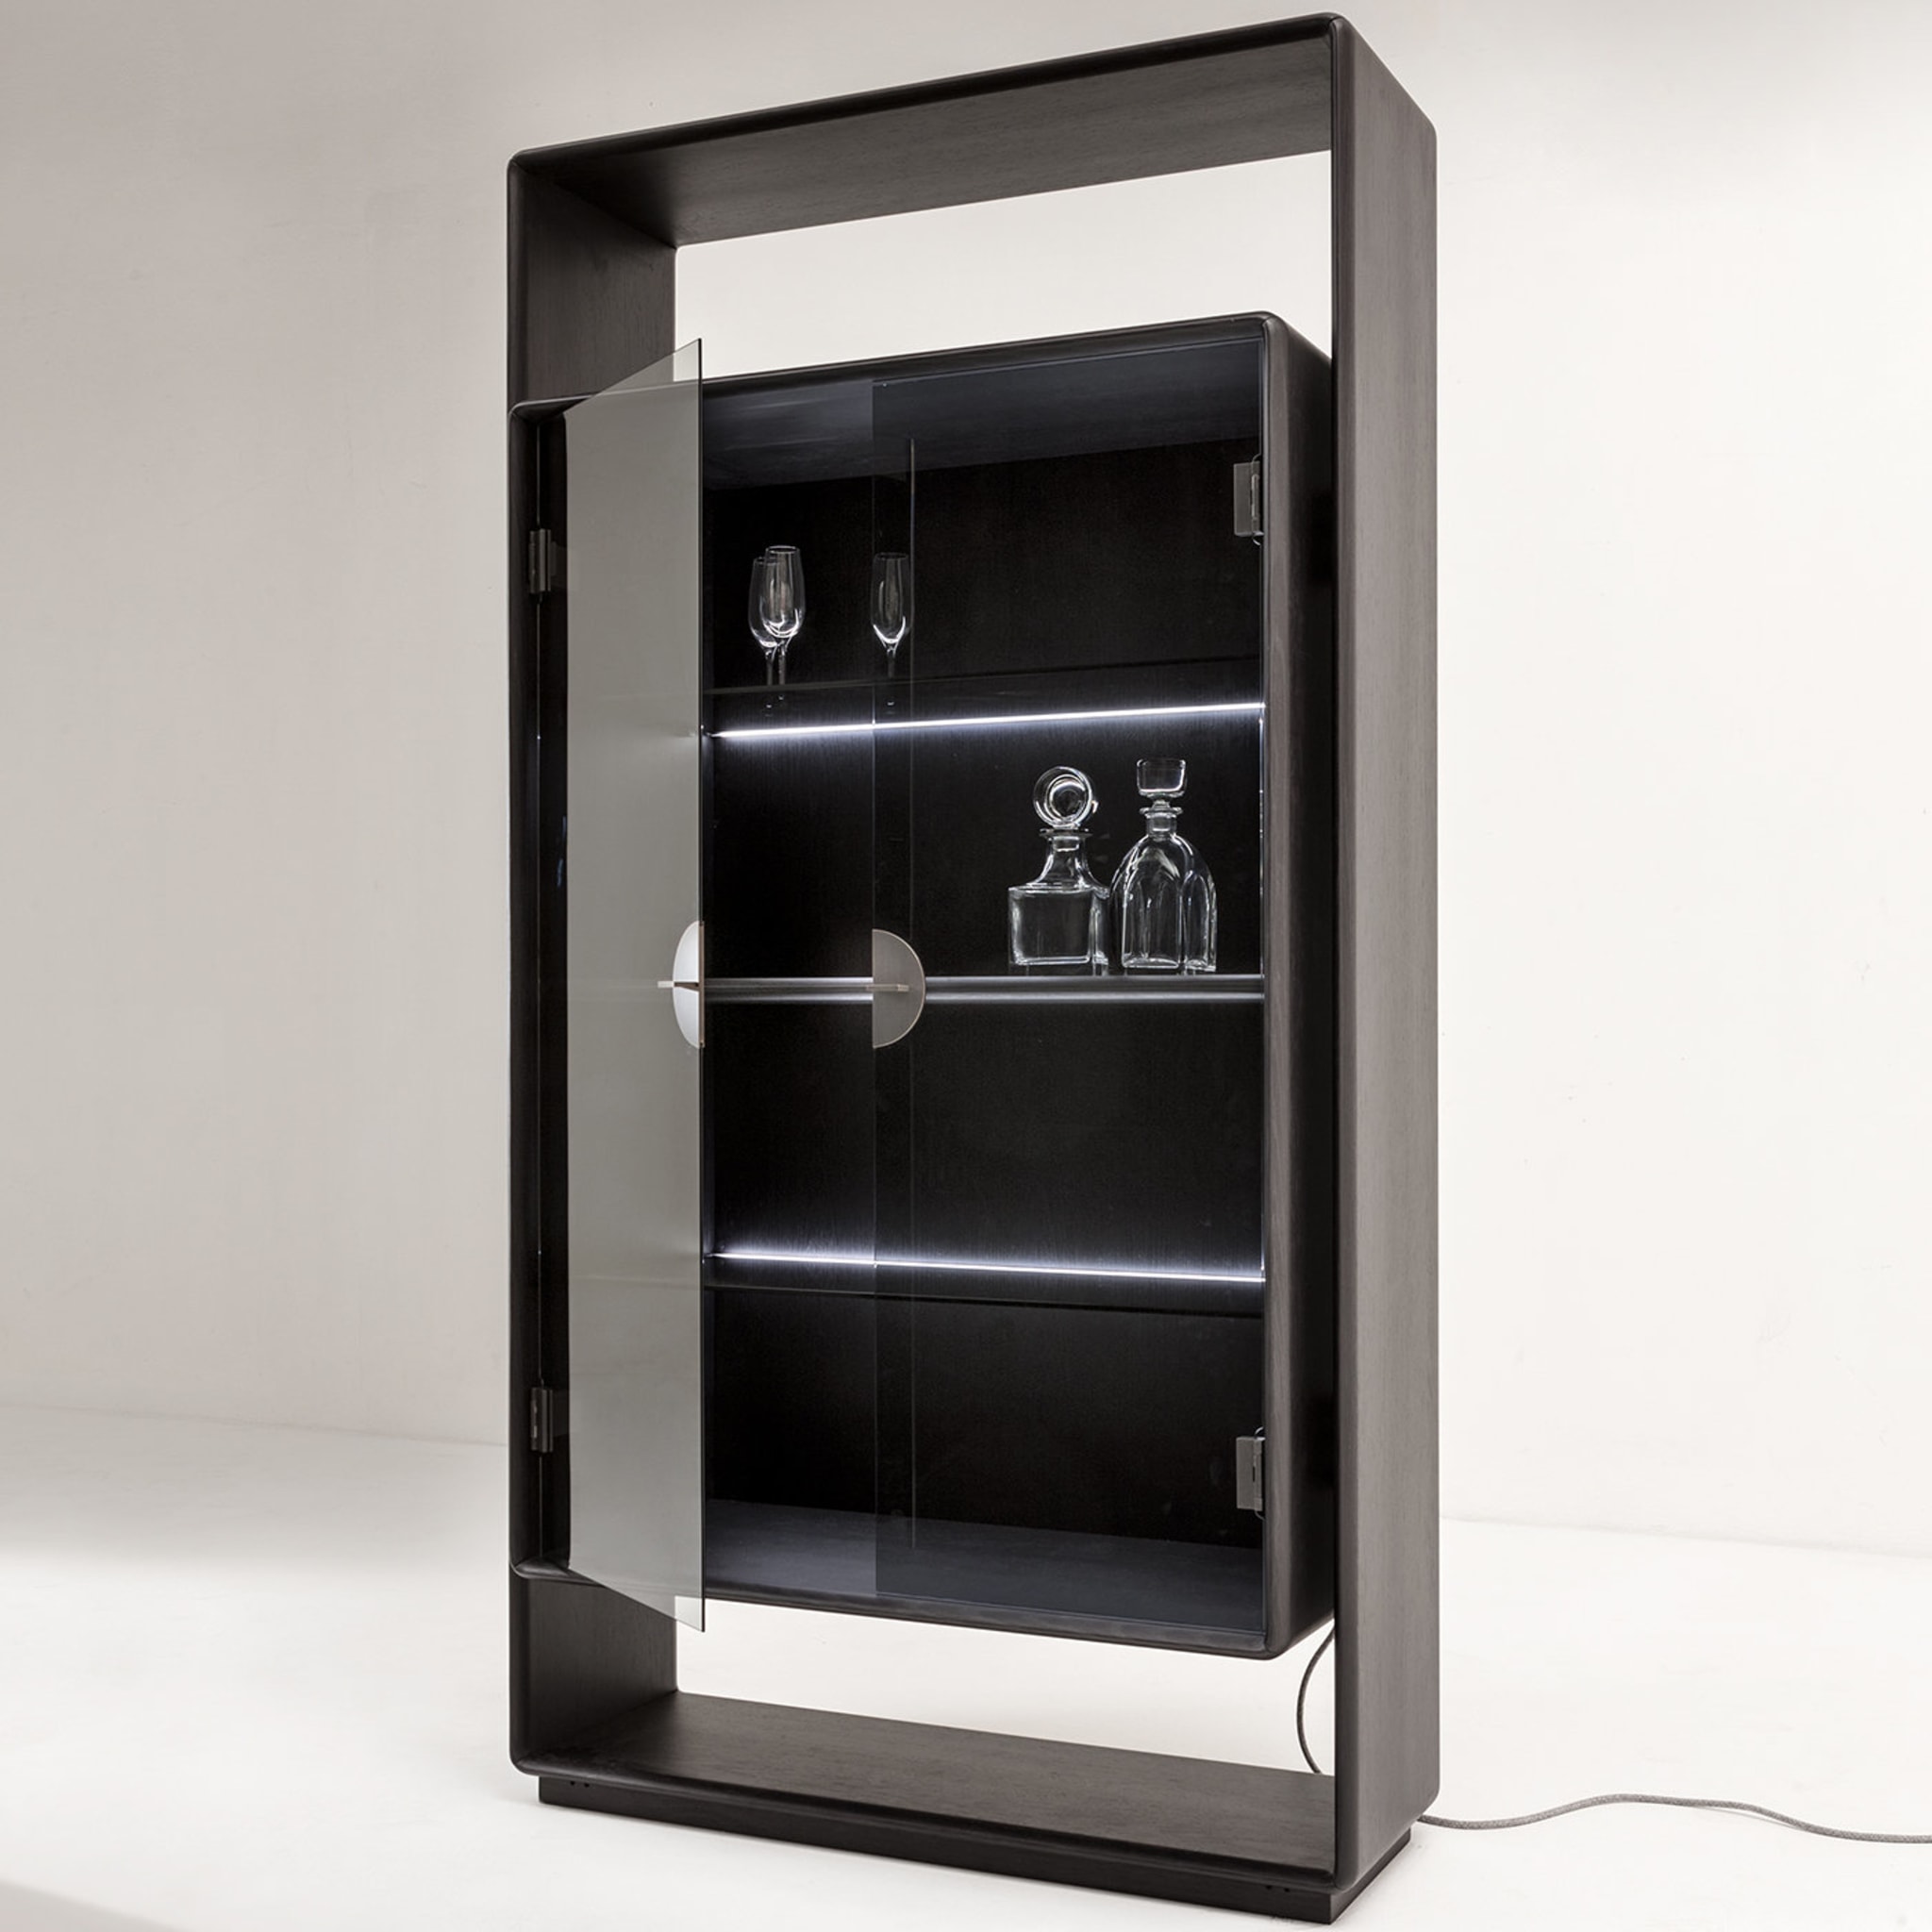 Talento Cabinet by Edoardo Colzani Design - Alternative view 4